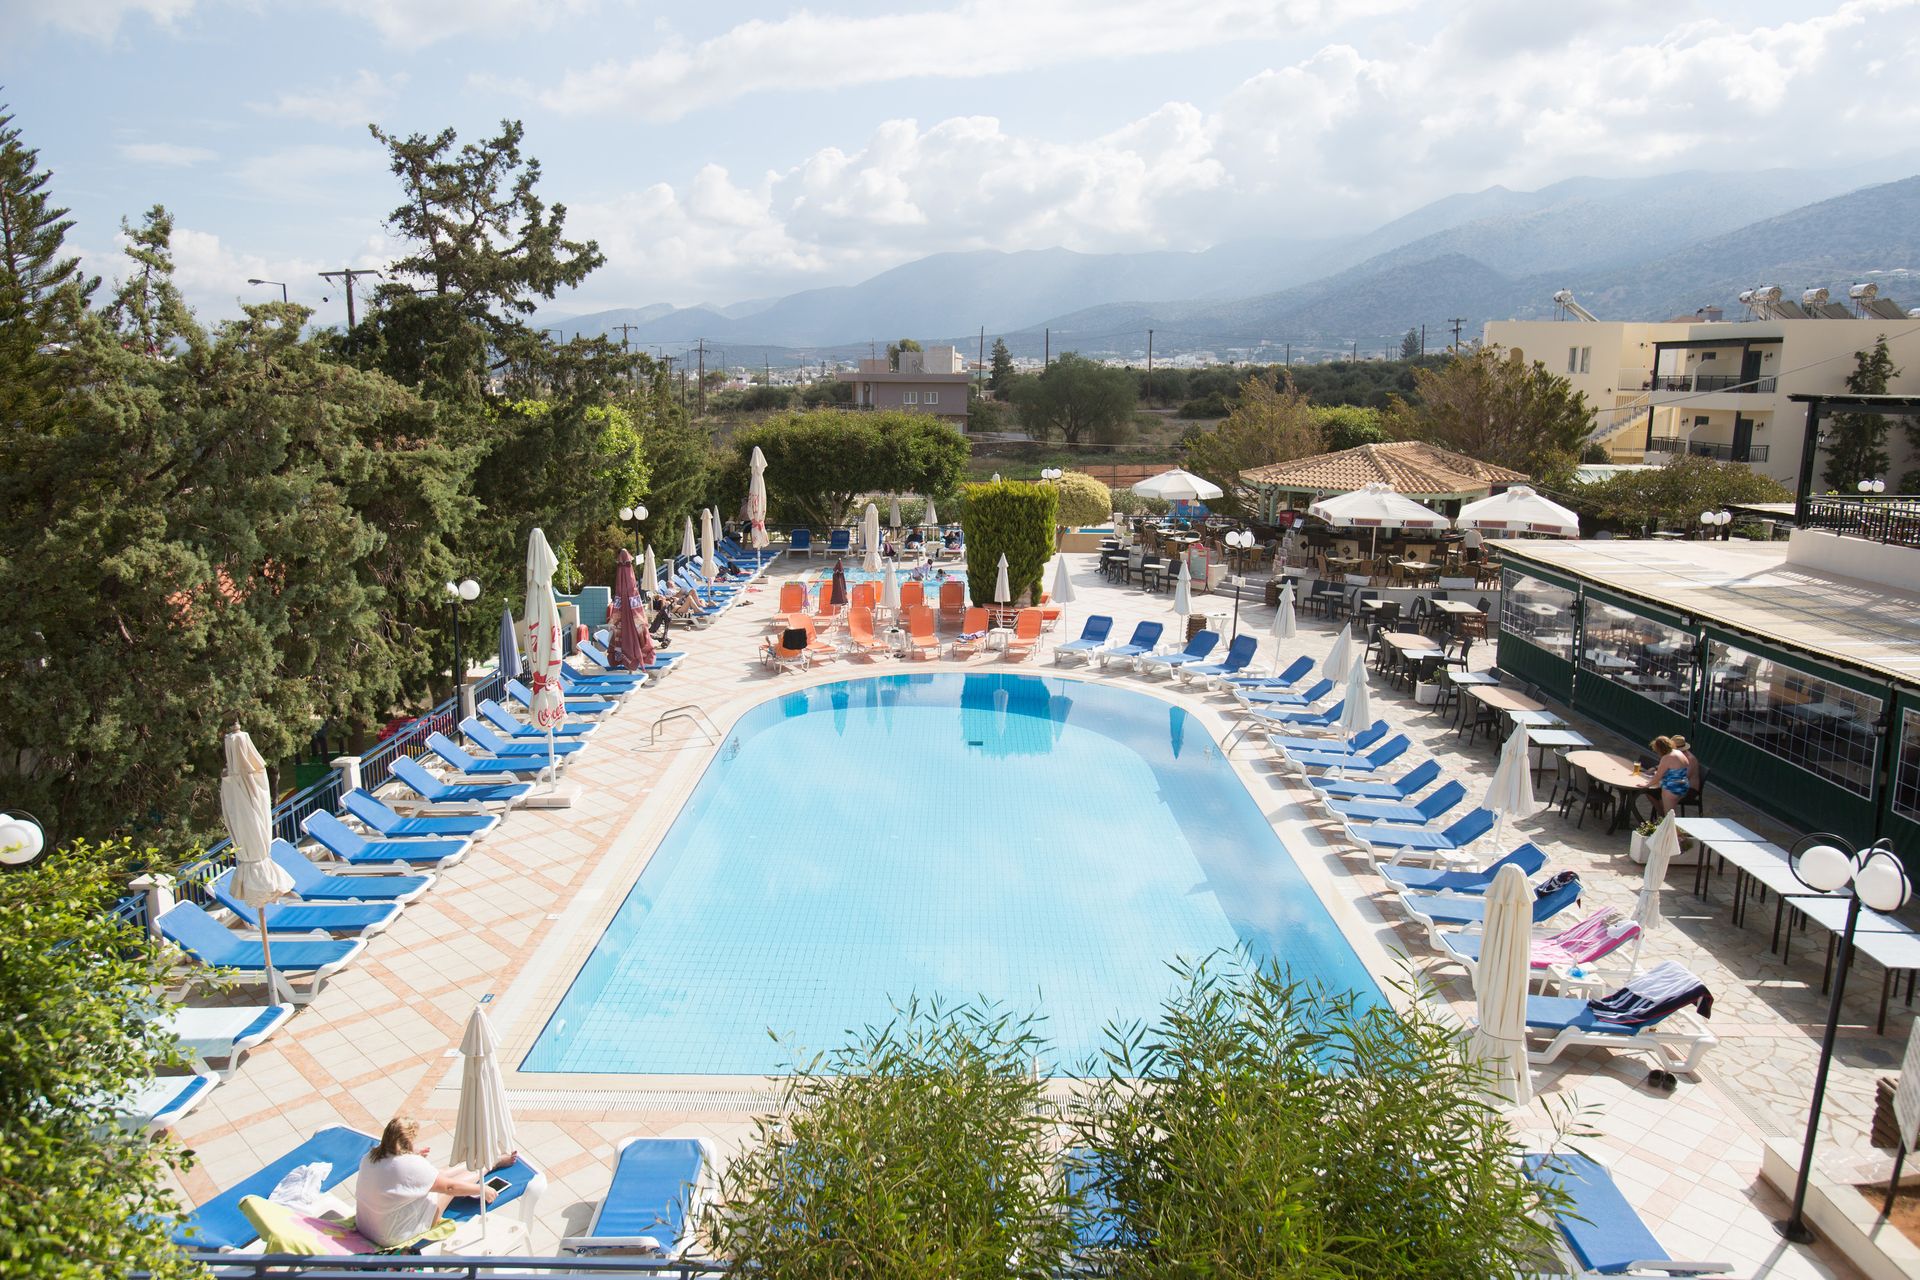 Anastasia Hotel Crete - Σταλίδα, Κρήτη ✦ 2 Ημέρες (1 Διανυκτέρευση) ✦ 2 άτομα ✦ Πρωινό ✦ 29/04/2022 έως 30/09/2022 ✦ Υπέροχη Τοποθεσία!